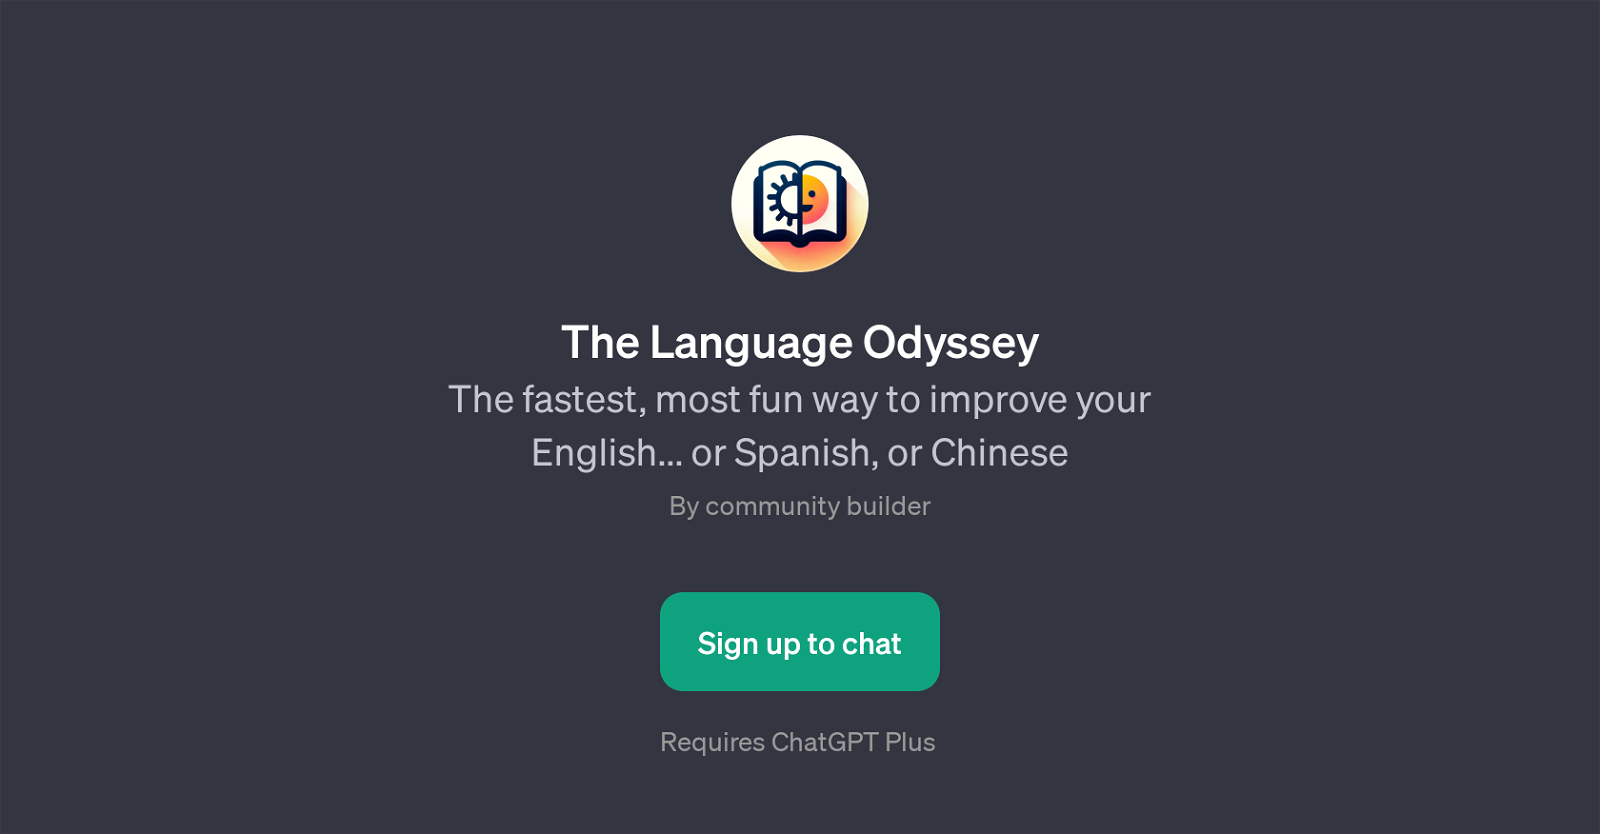 The Language Odyssey website